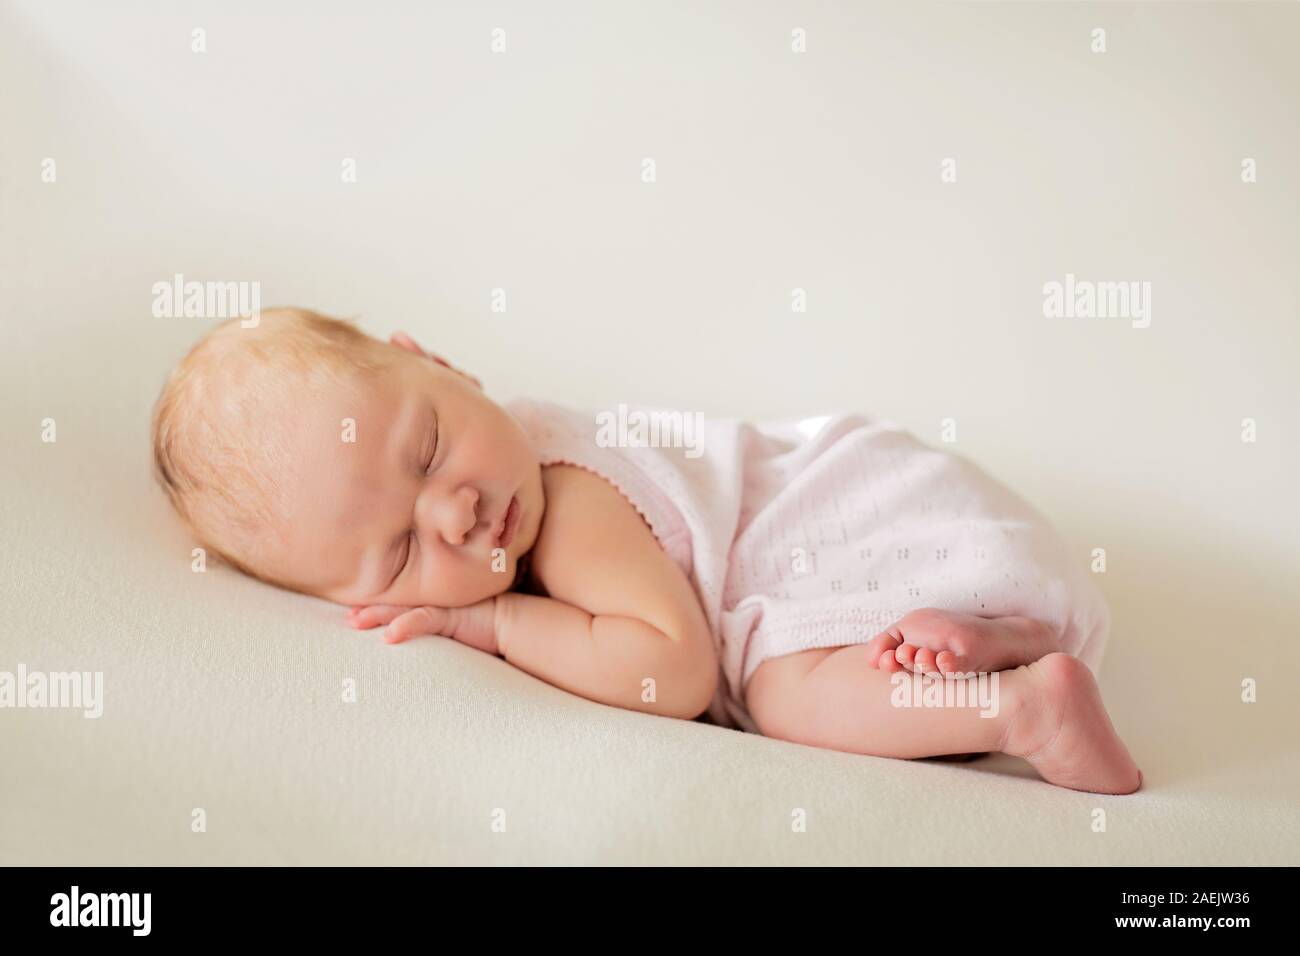 Sleeping newborn baby girl on a blanket. Baby goods packaging template Stock Photo